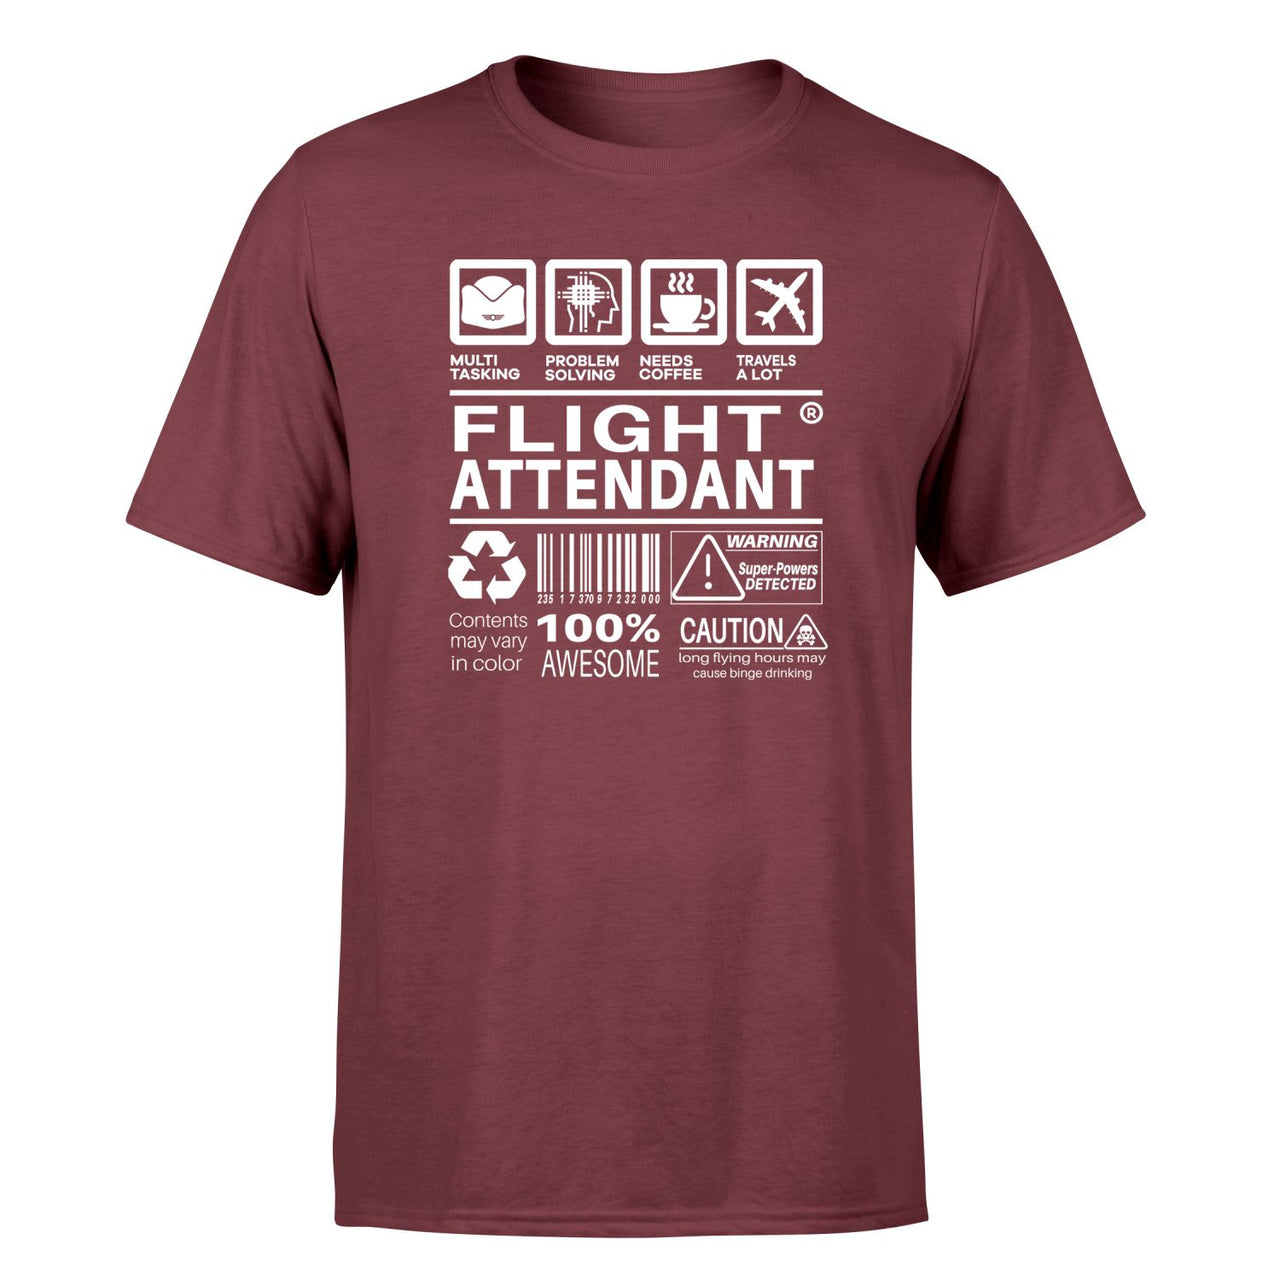 Flight Attendant Label Designed T-Shirts